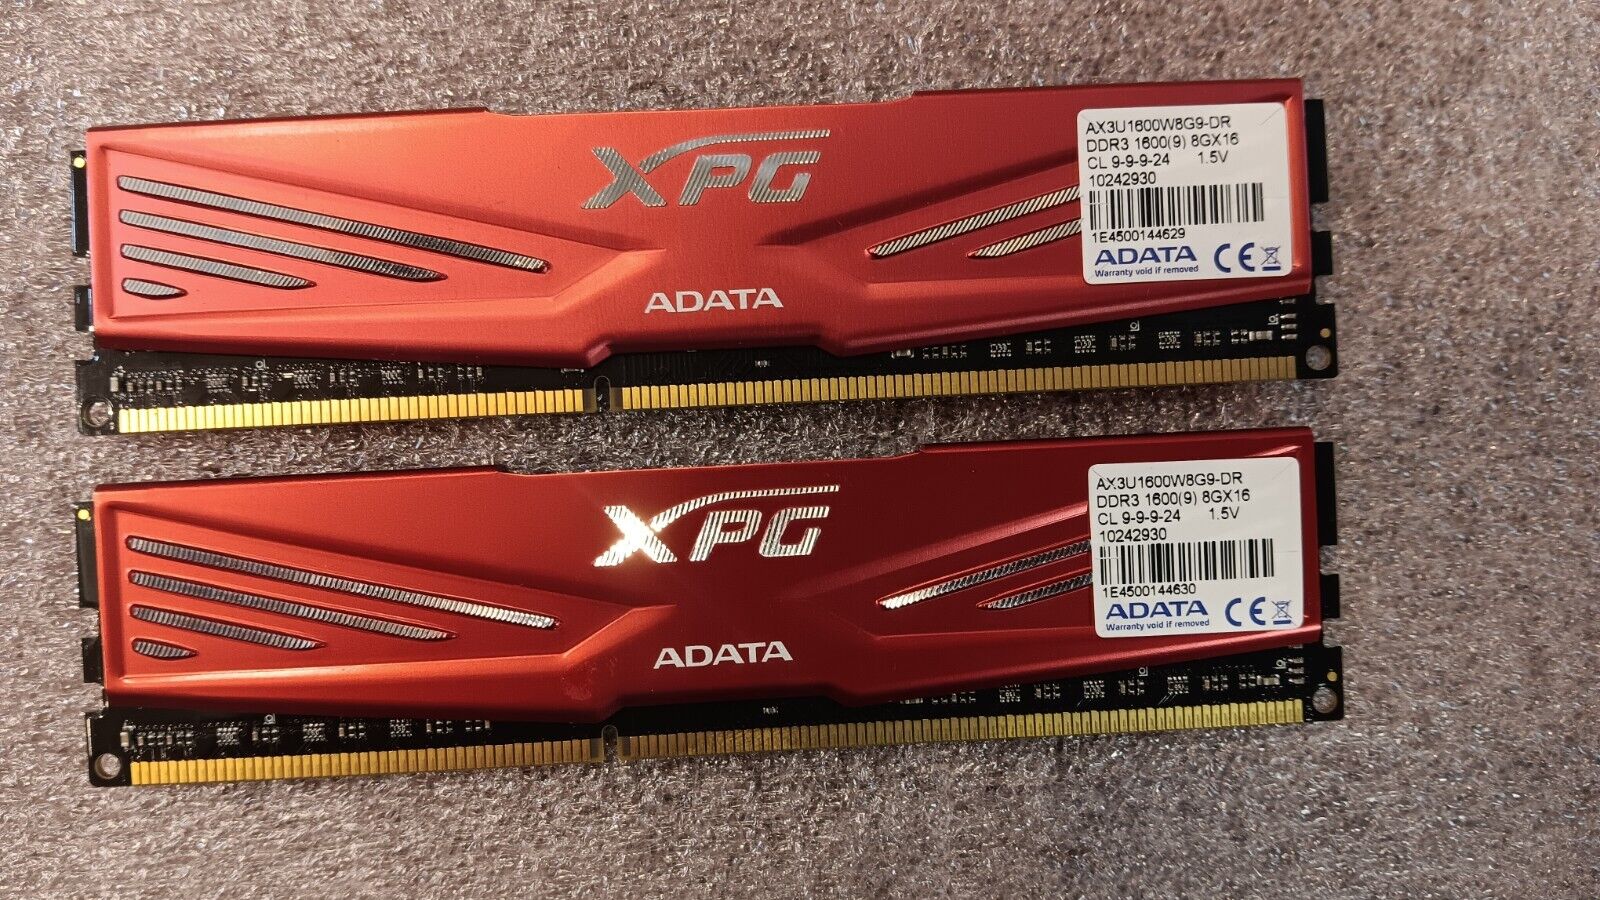 Adata XPG V1.0 DDR3 RAM 16GB (2x8GB) DDR3 1600MHz PC3 12800 AX3U1866W8G9-DR